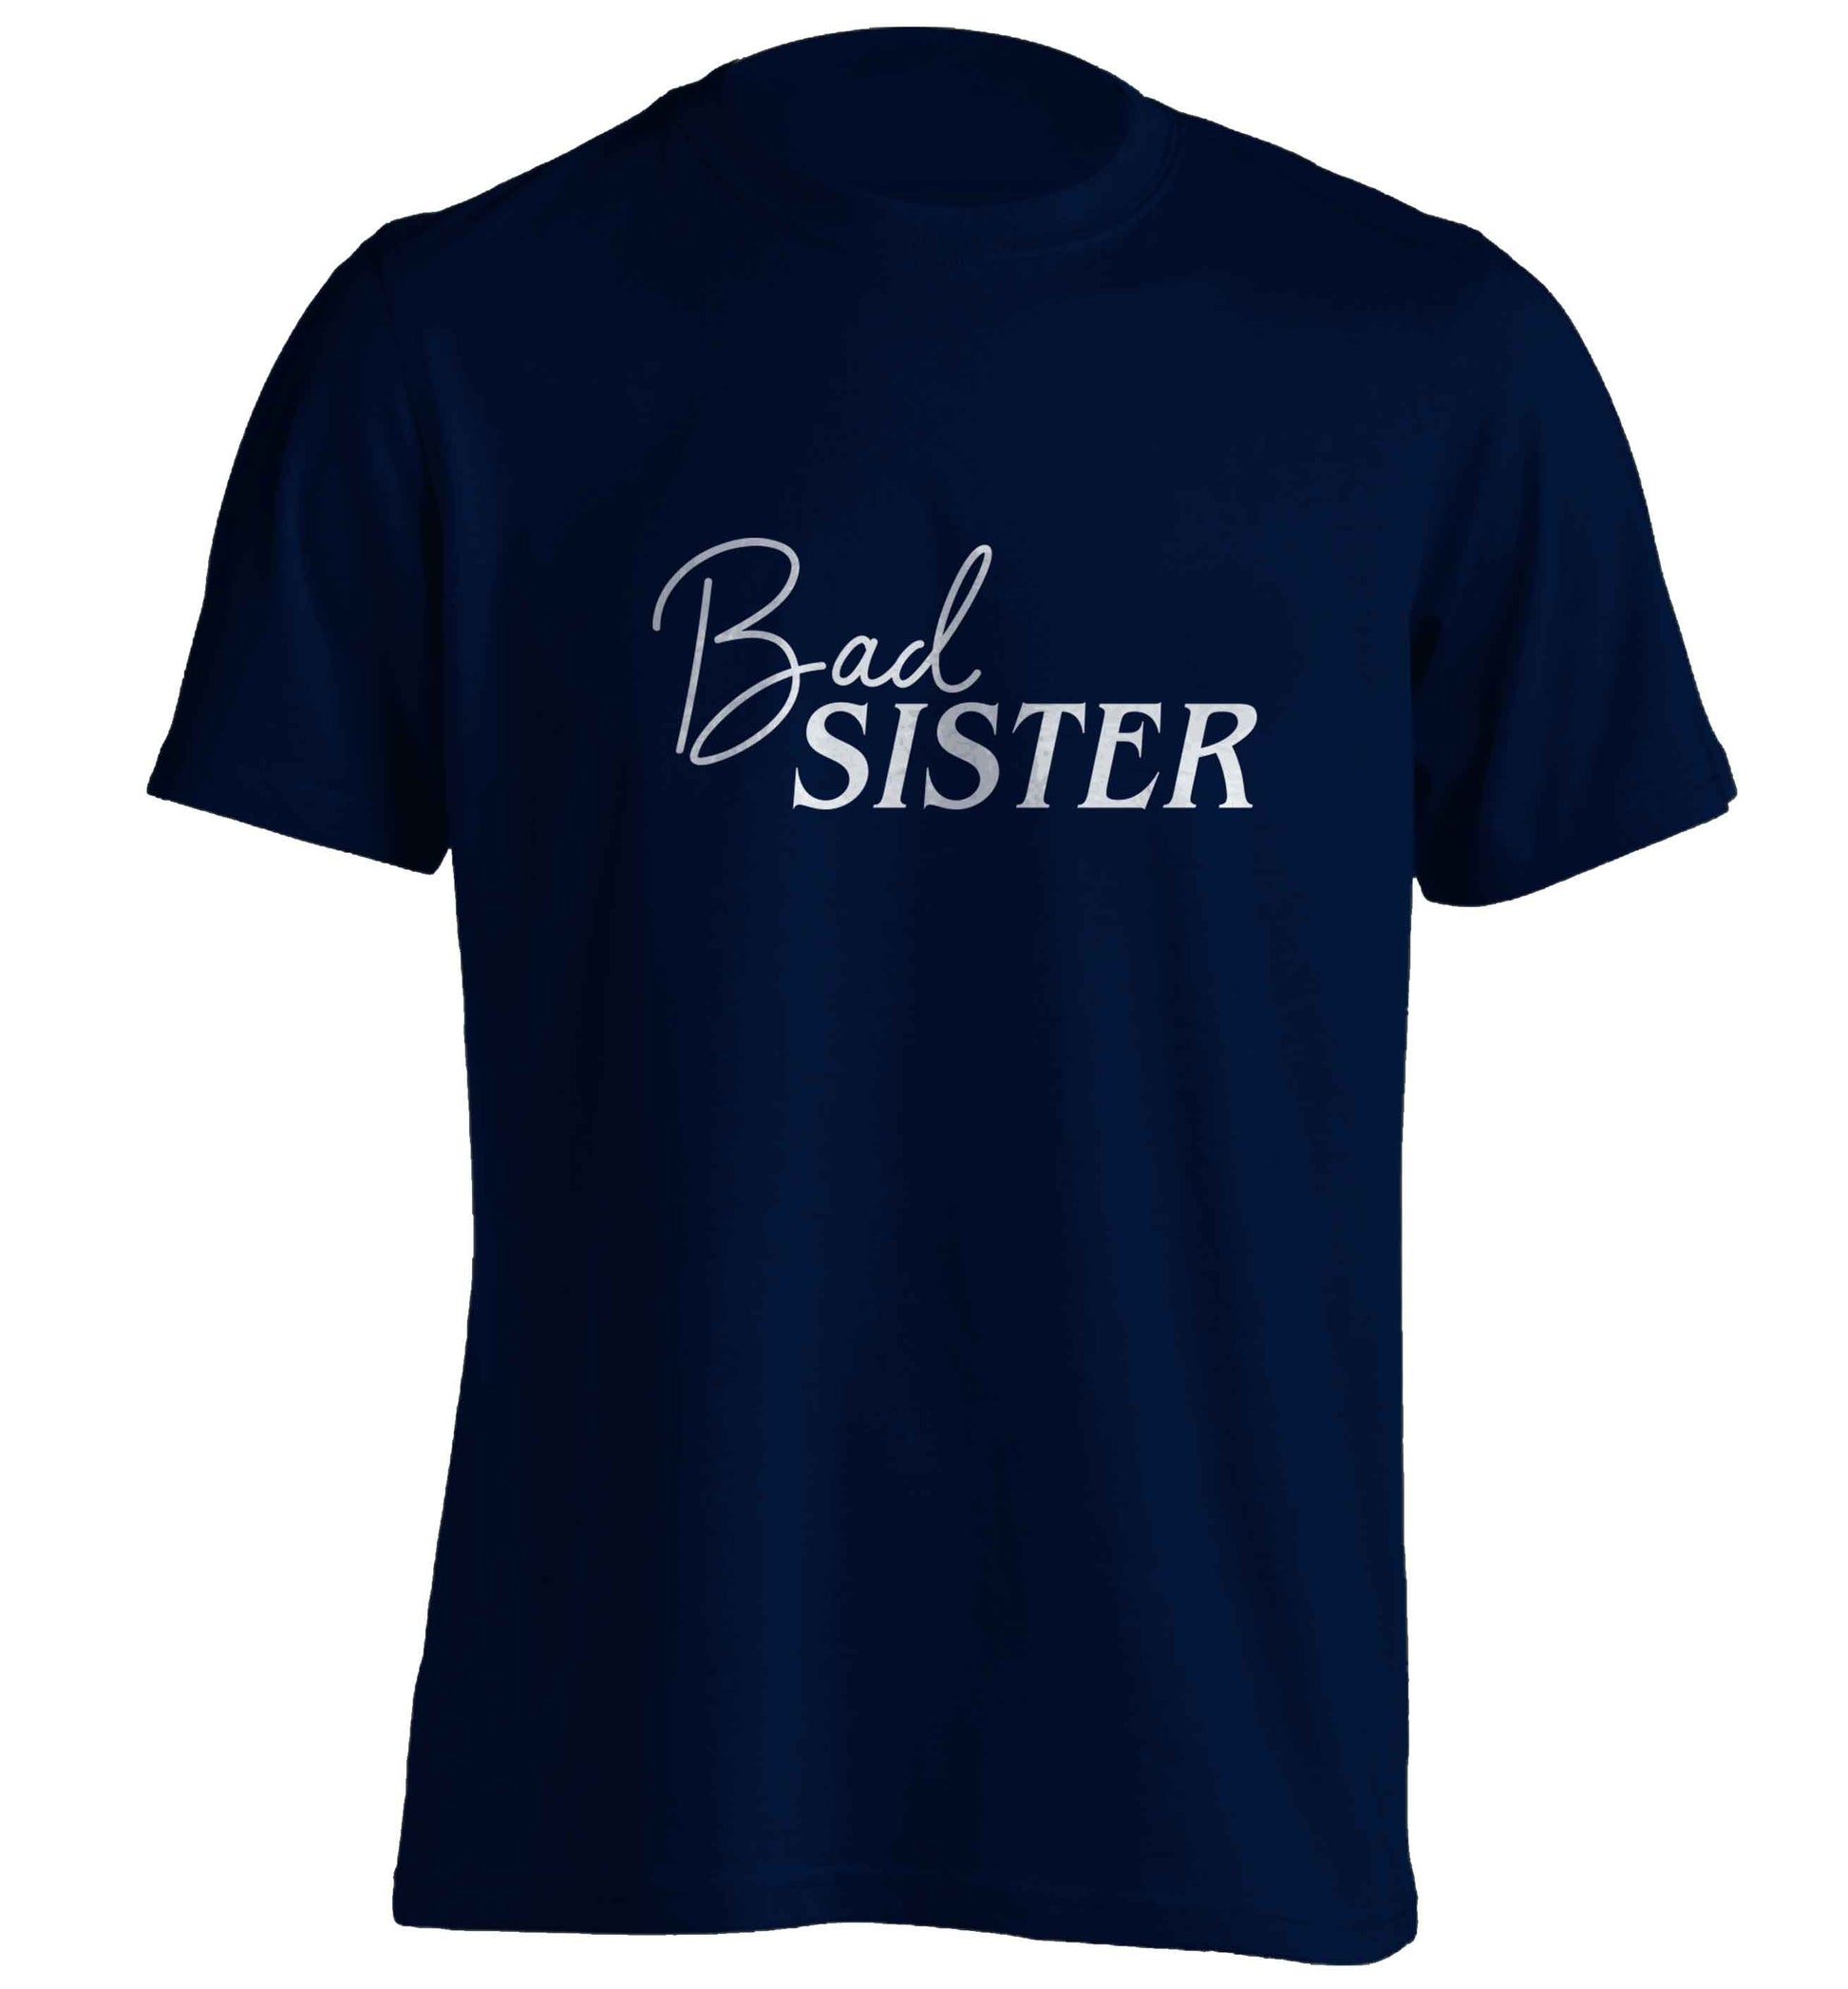 Bad sister adults unisex navy Tshirt 2XL